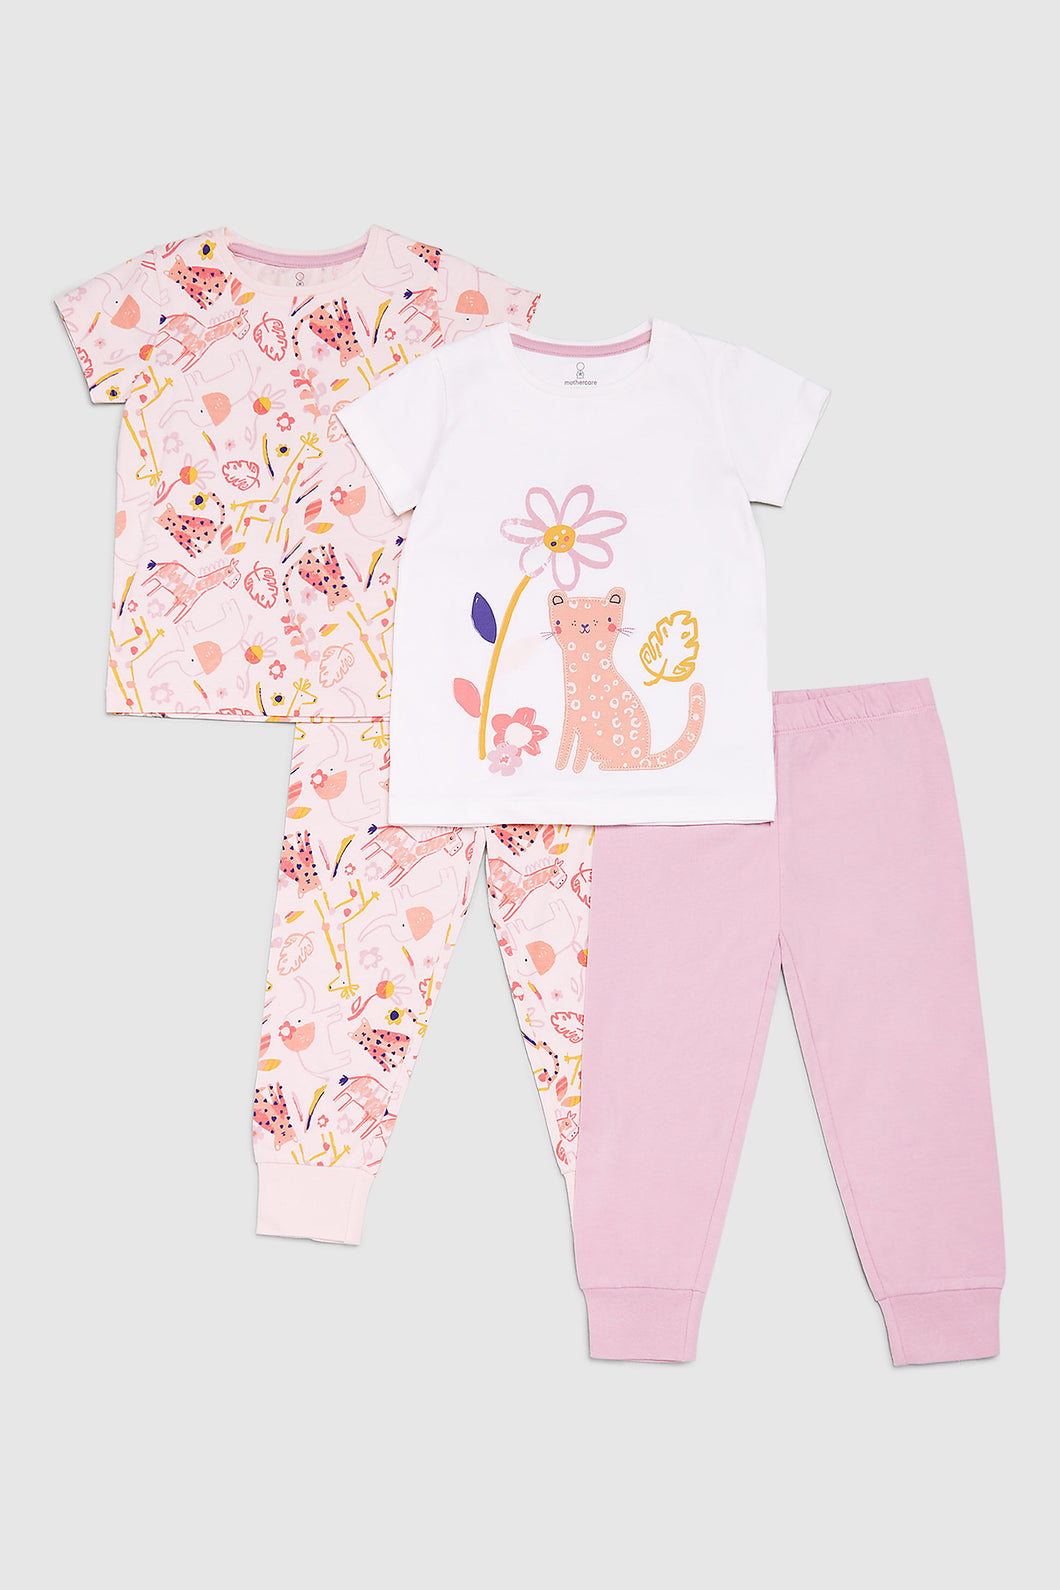 Mothercare Safari Pyjamas - 2 Pack